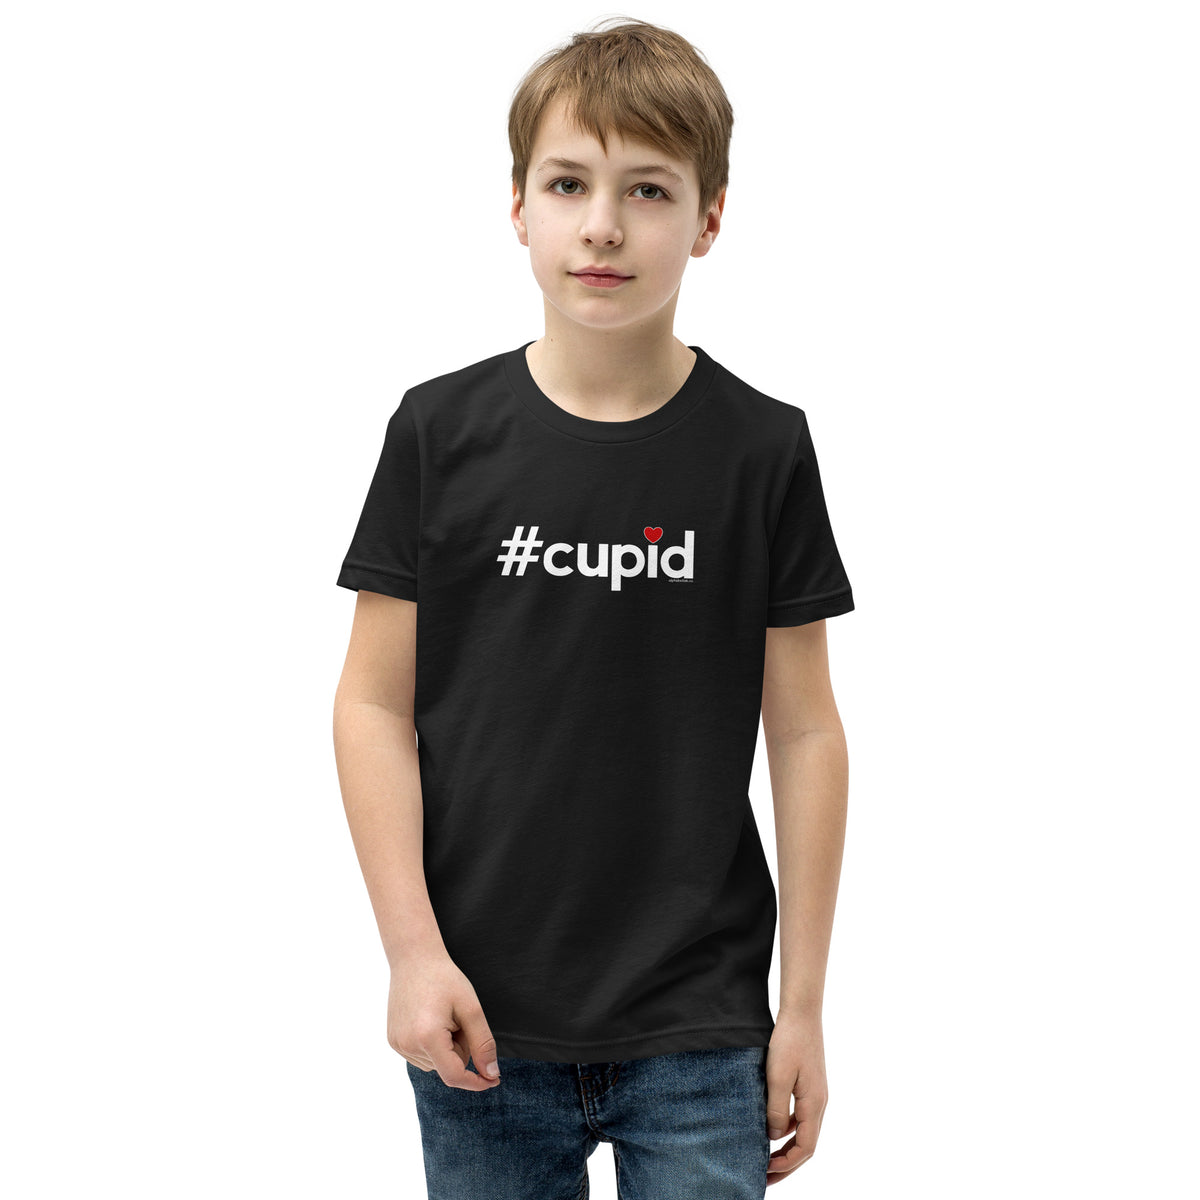 Hashtag Cupid Kids Valentine’s Day T-Shirt